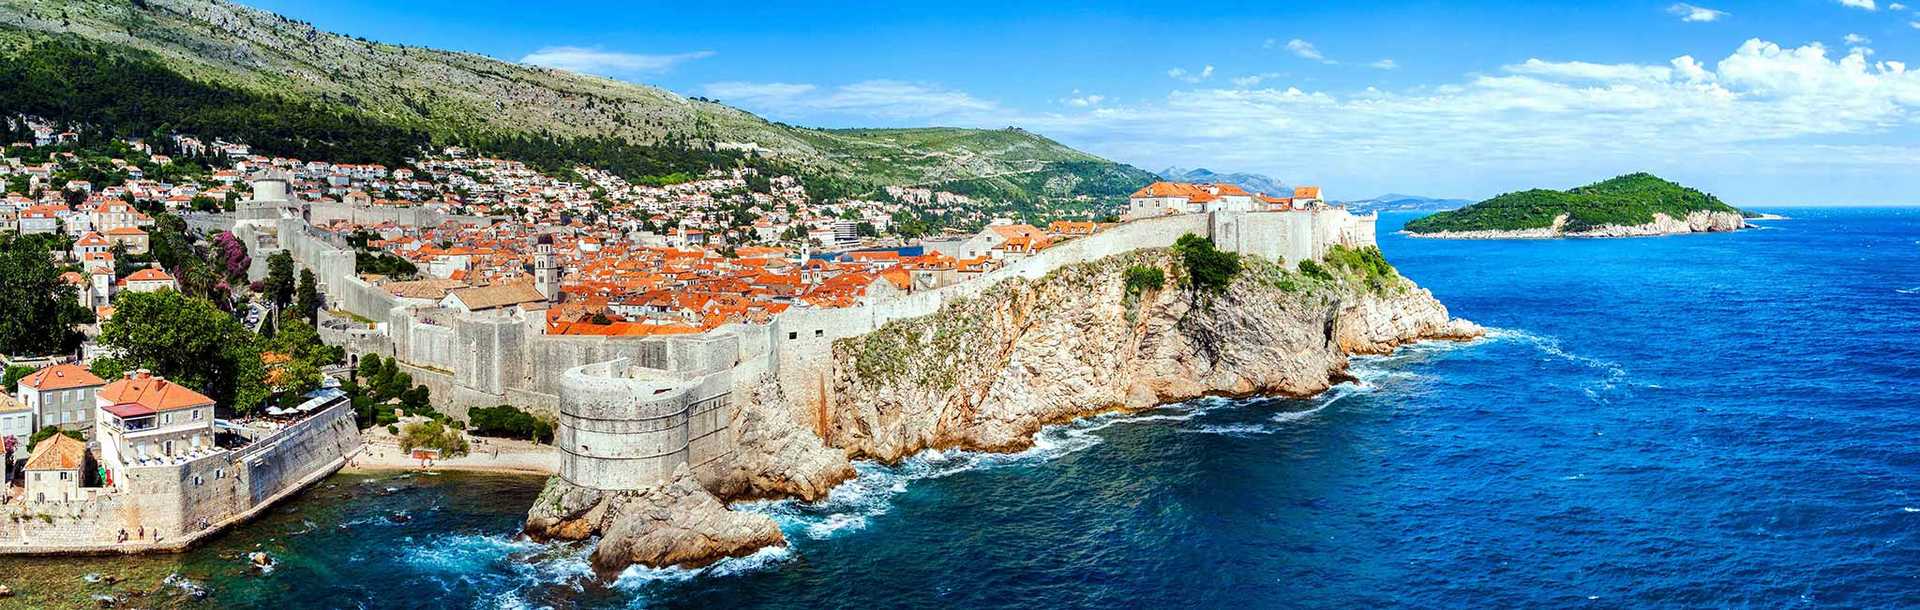 Dubrovnik overlooking the Adriatic Sea on the Dalmatian Coast.